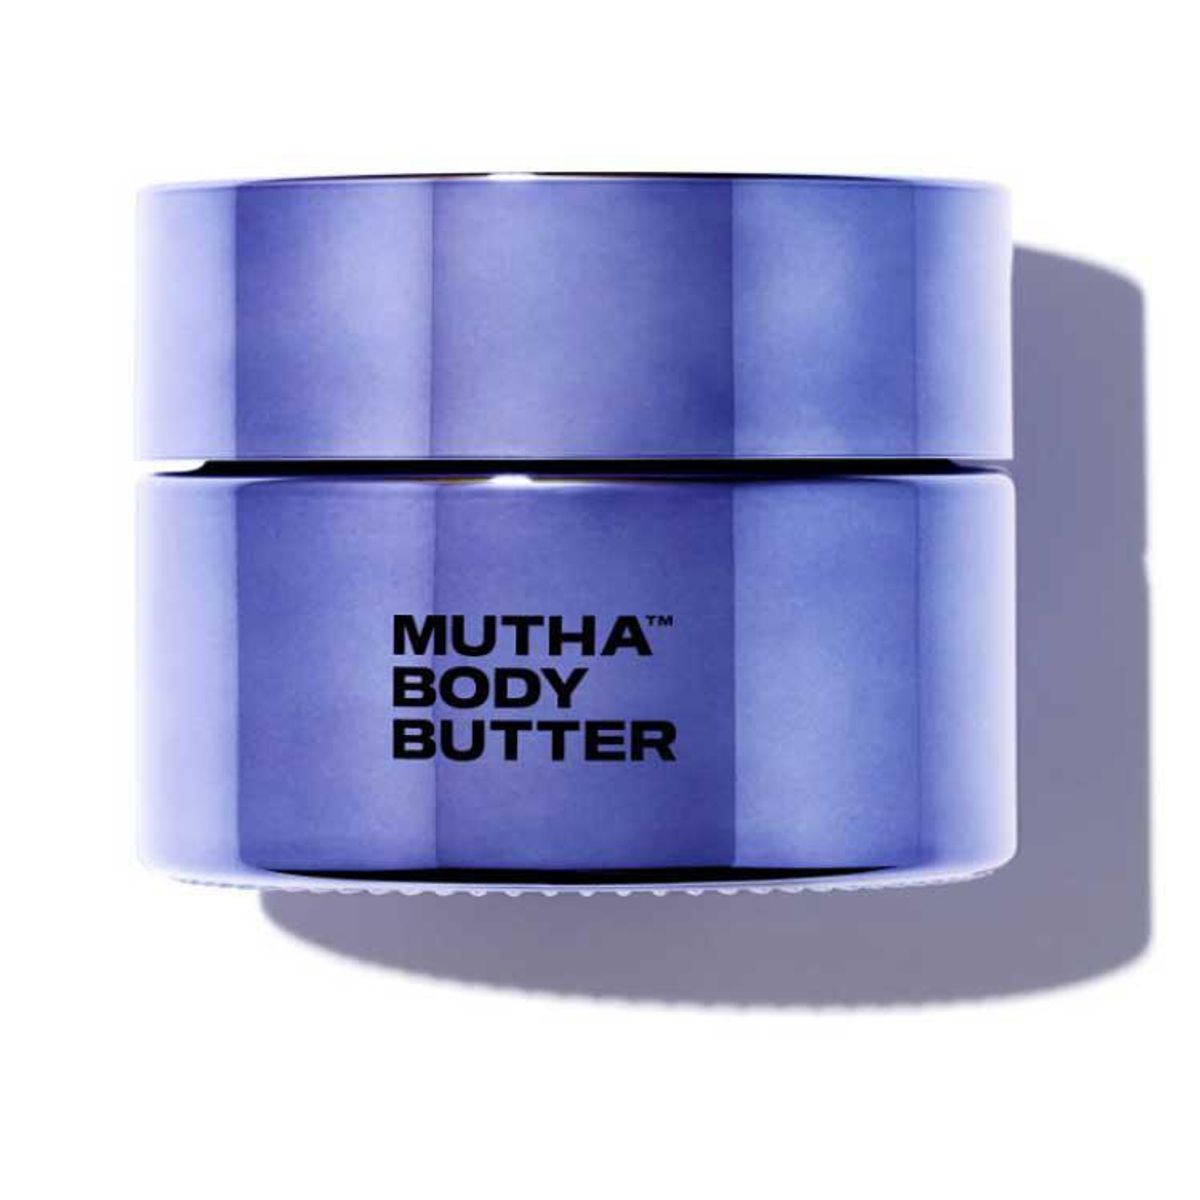 mutha body butter